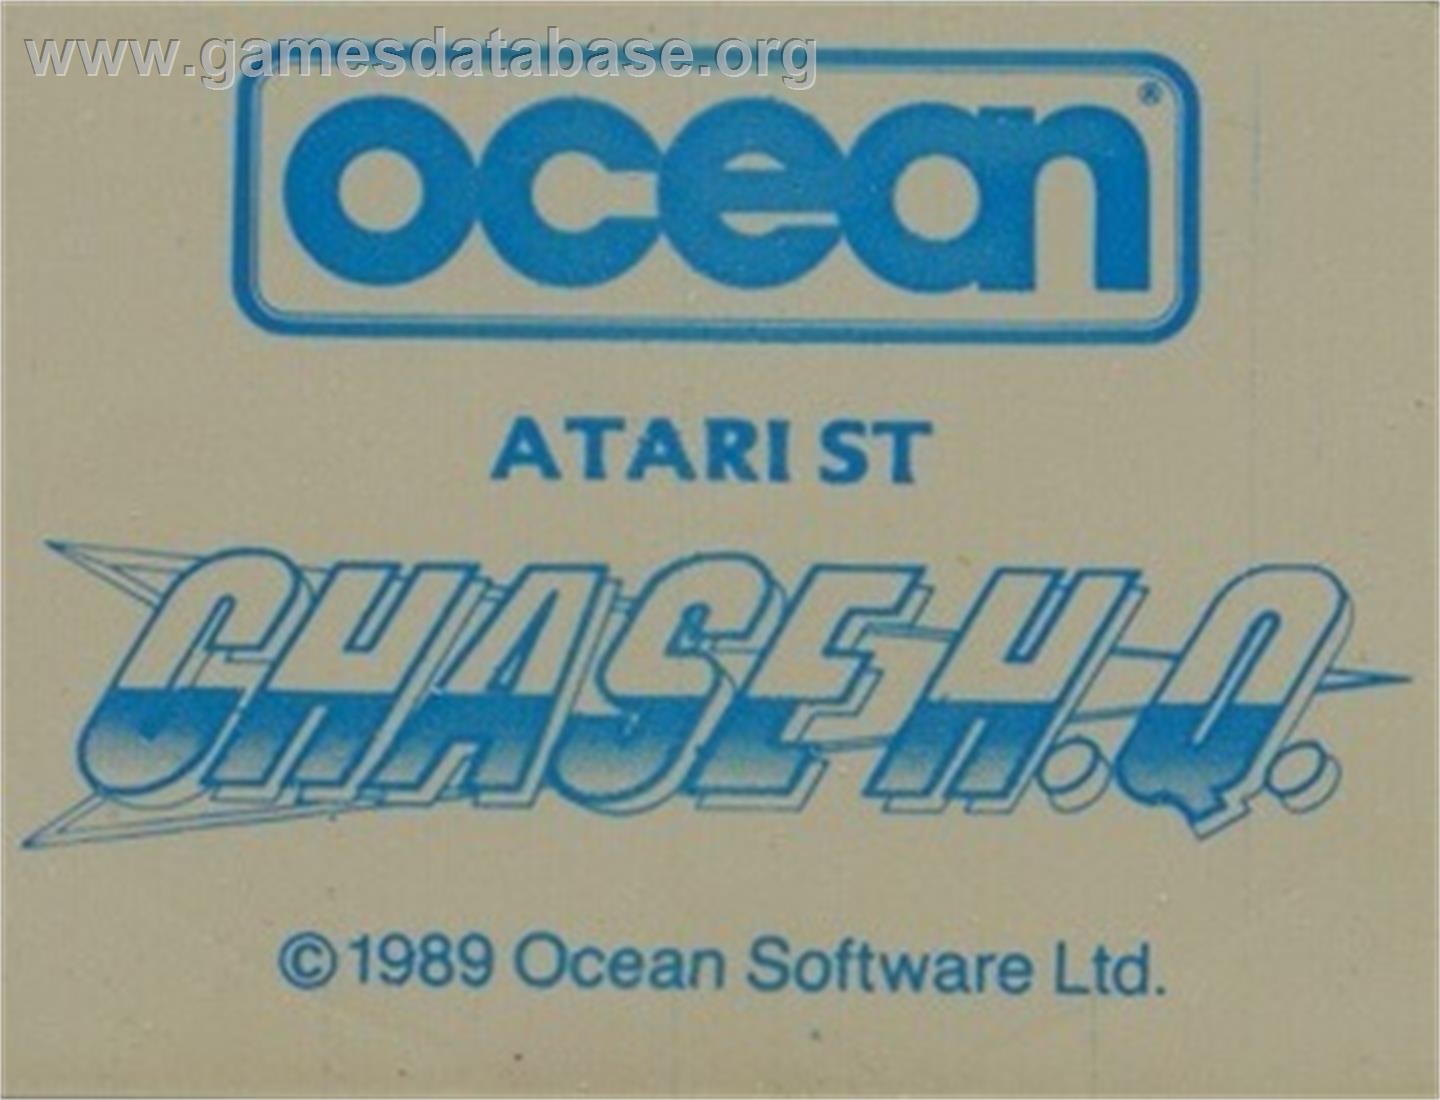 Chase H.Q. - Atari ST - Artwork - Cartridge Top